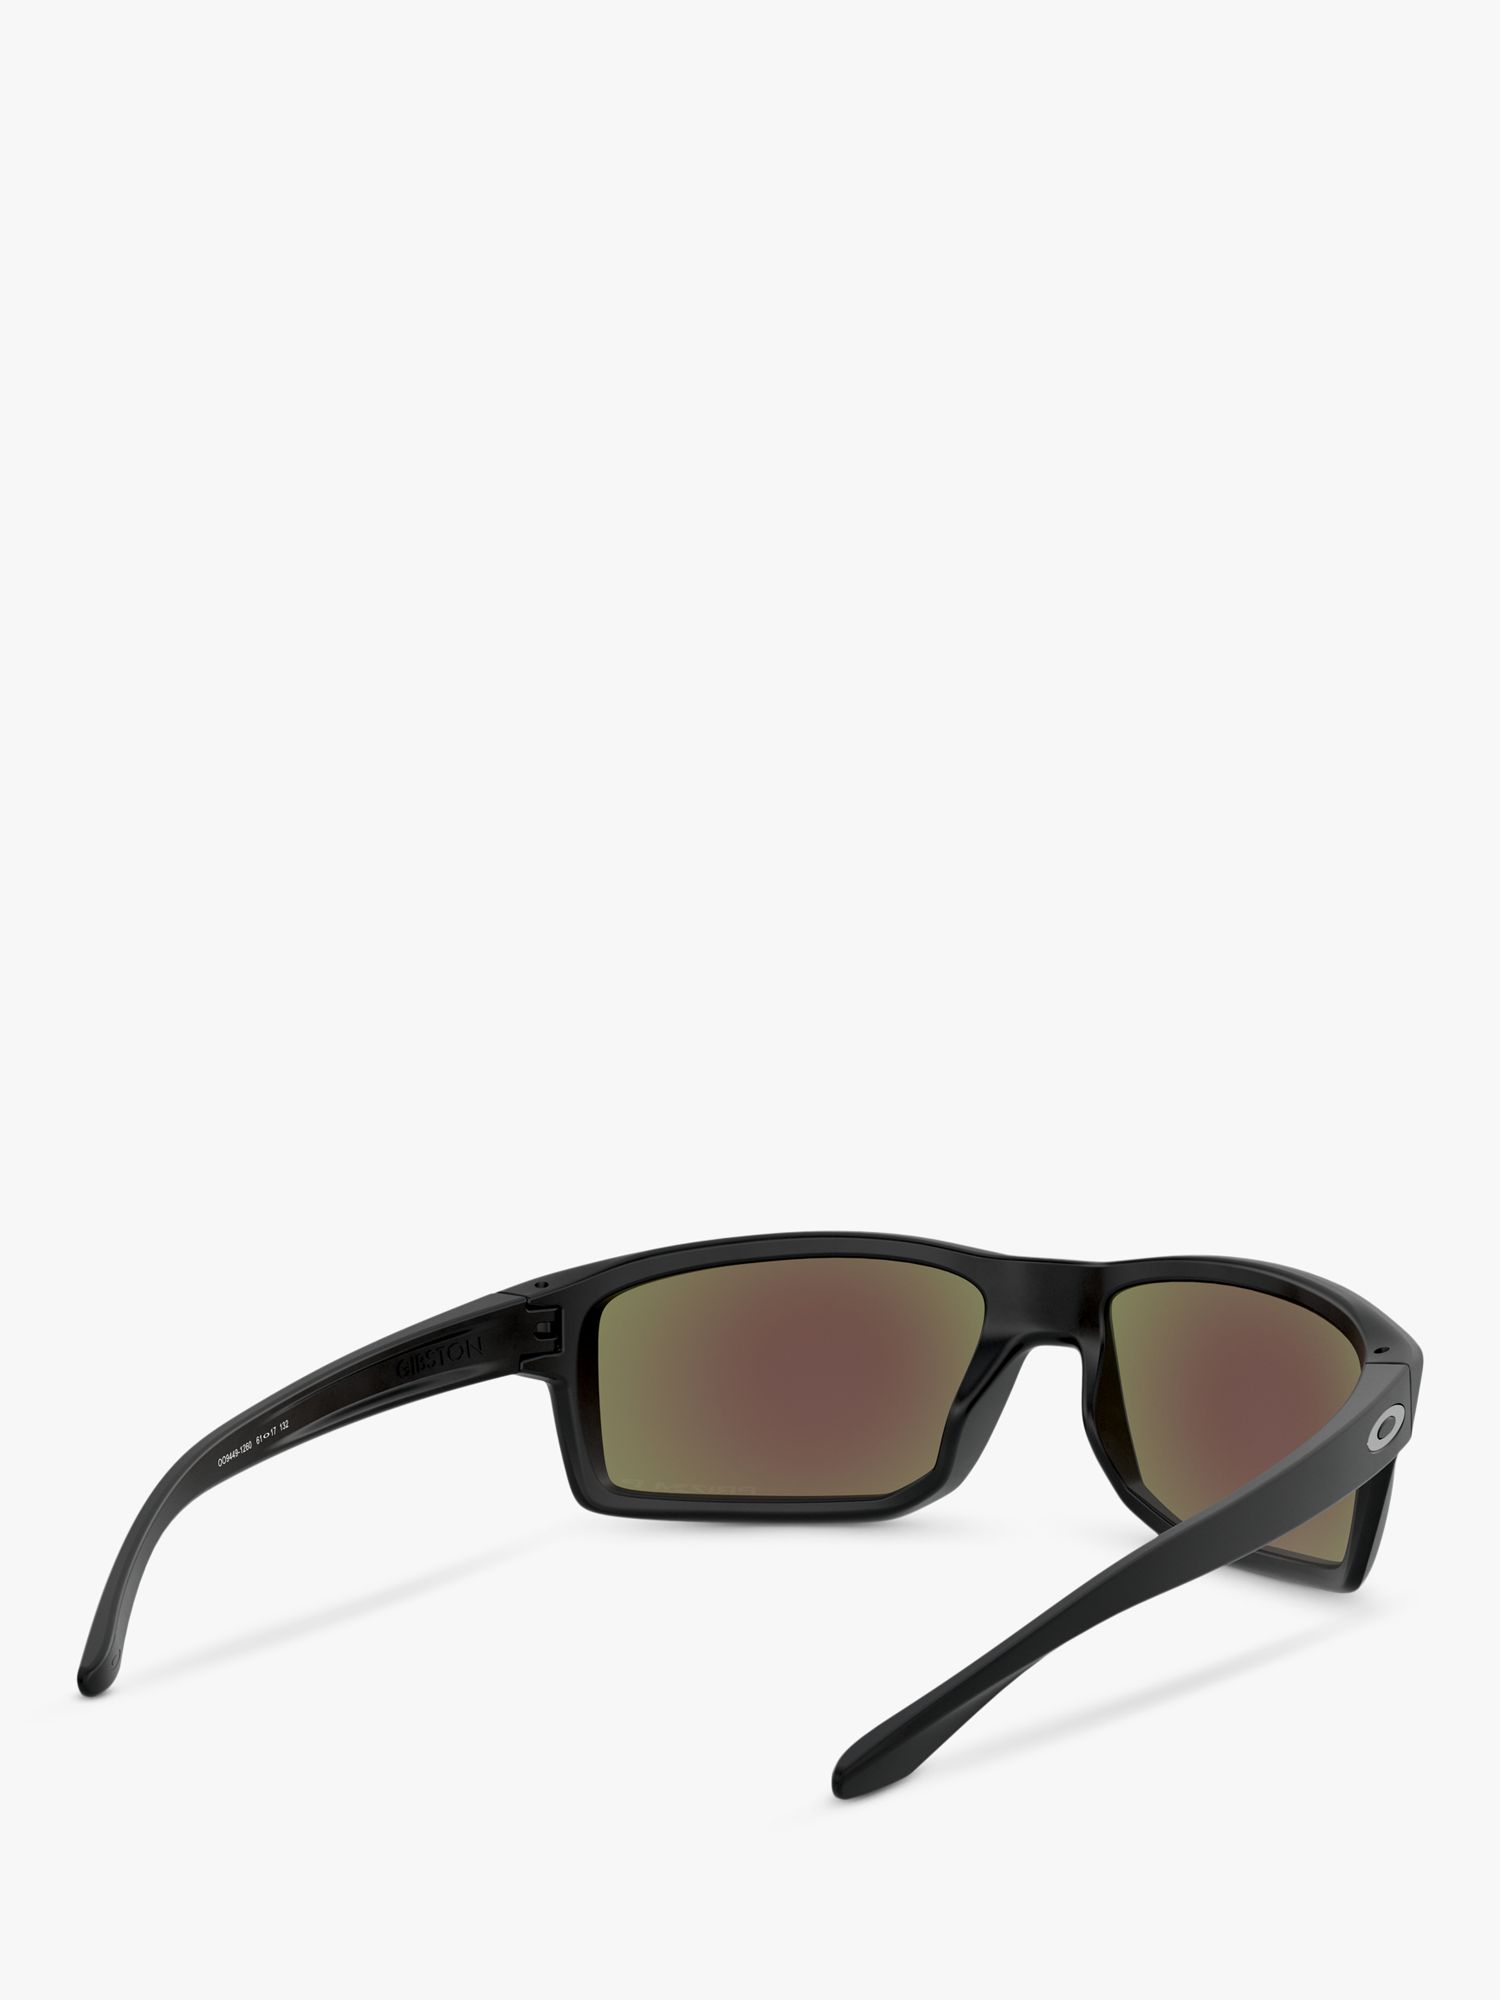 Oakley OO9449 Men's Polarised Square Sunglasses, Matte Black